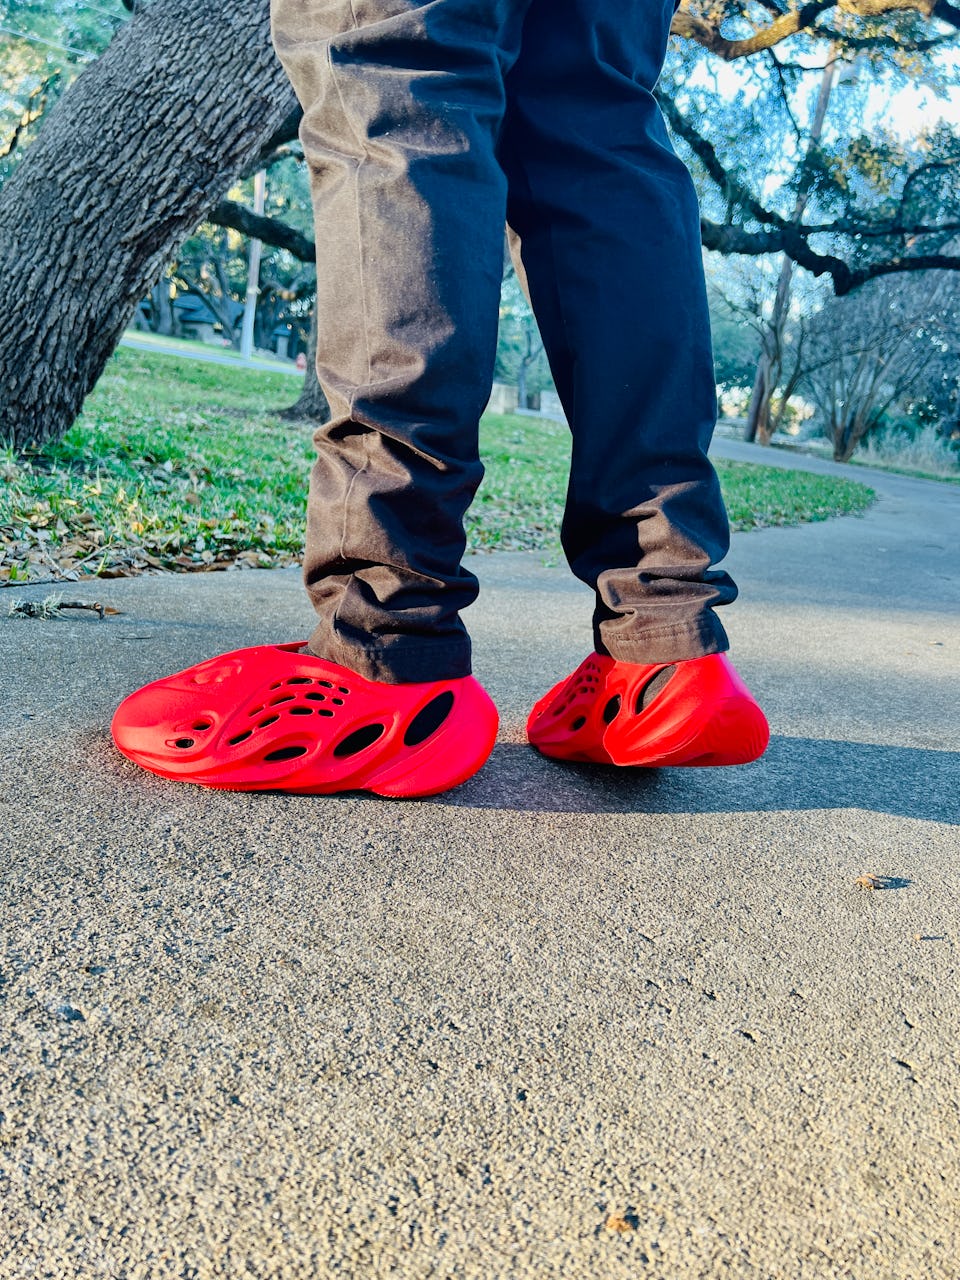 Wearing Kanye's Yeezy Foam Runner: Best slippers ever?